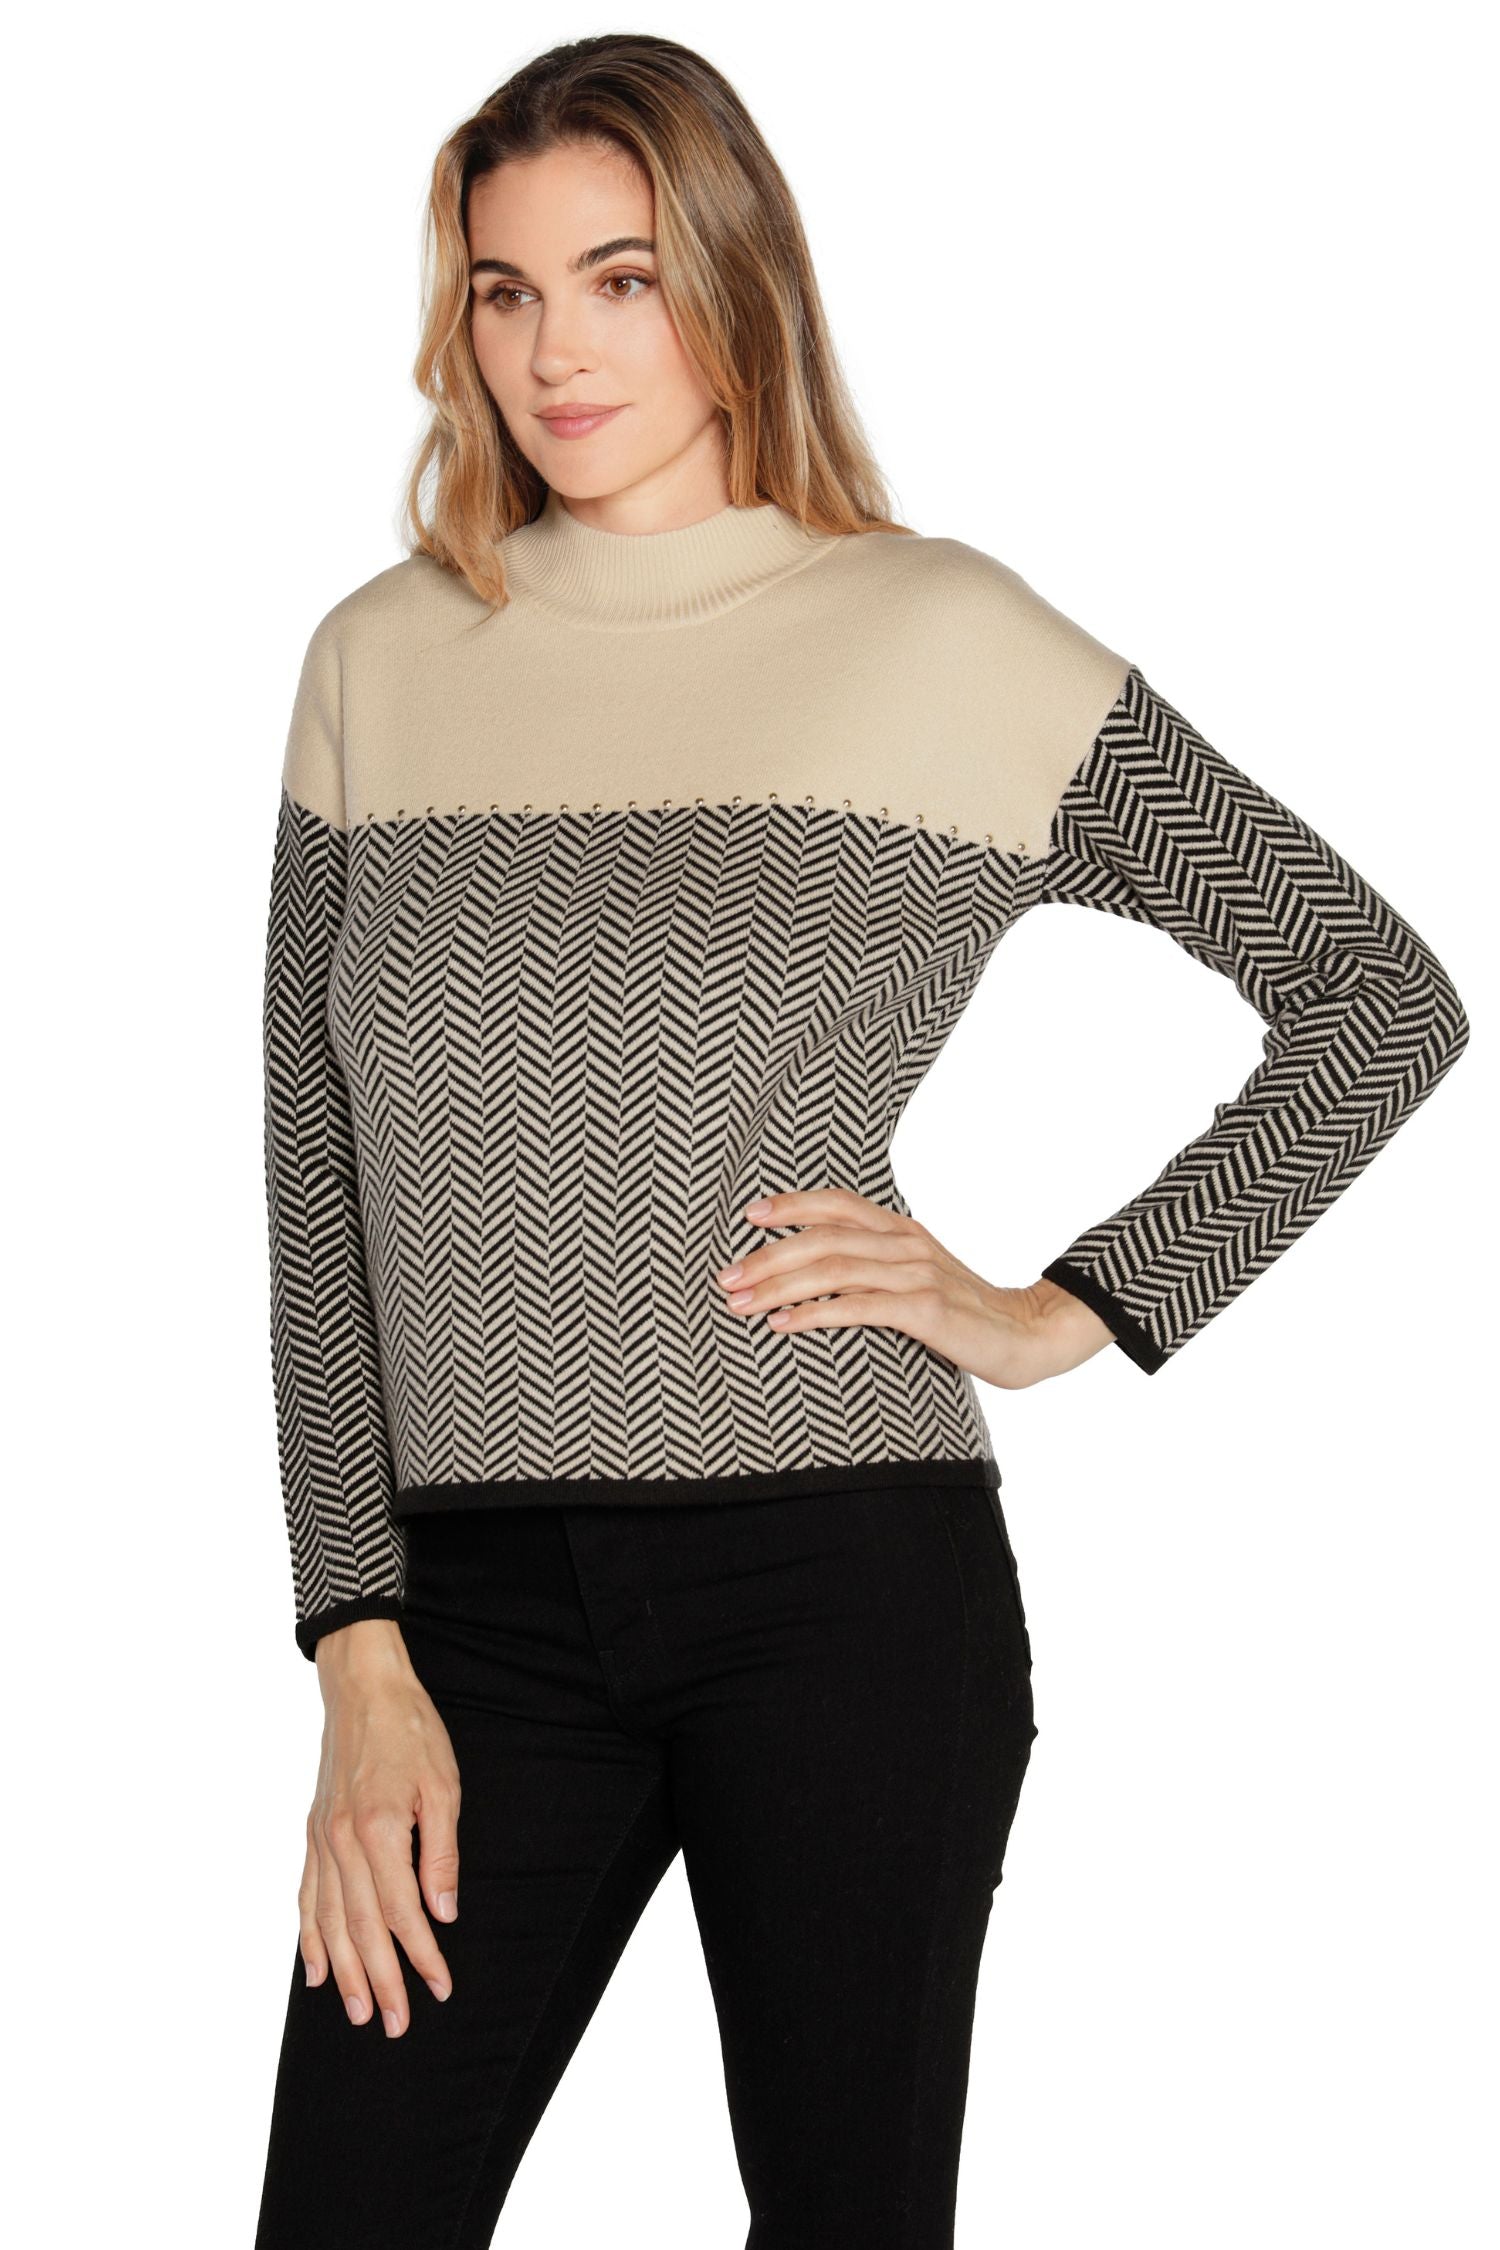 Women's Mock Neck Color Blocked Sweater with Herringbone Knit